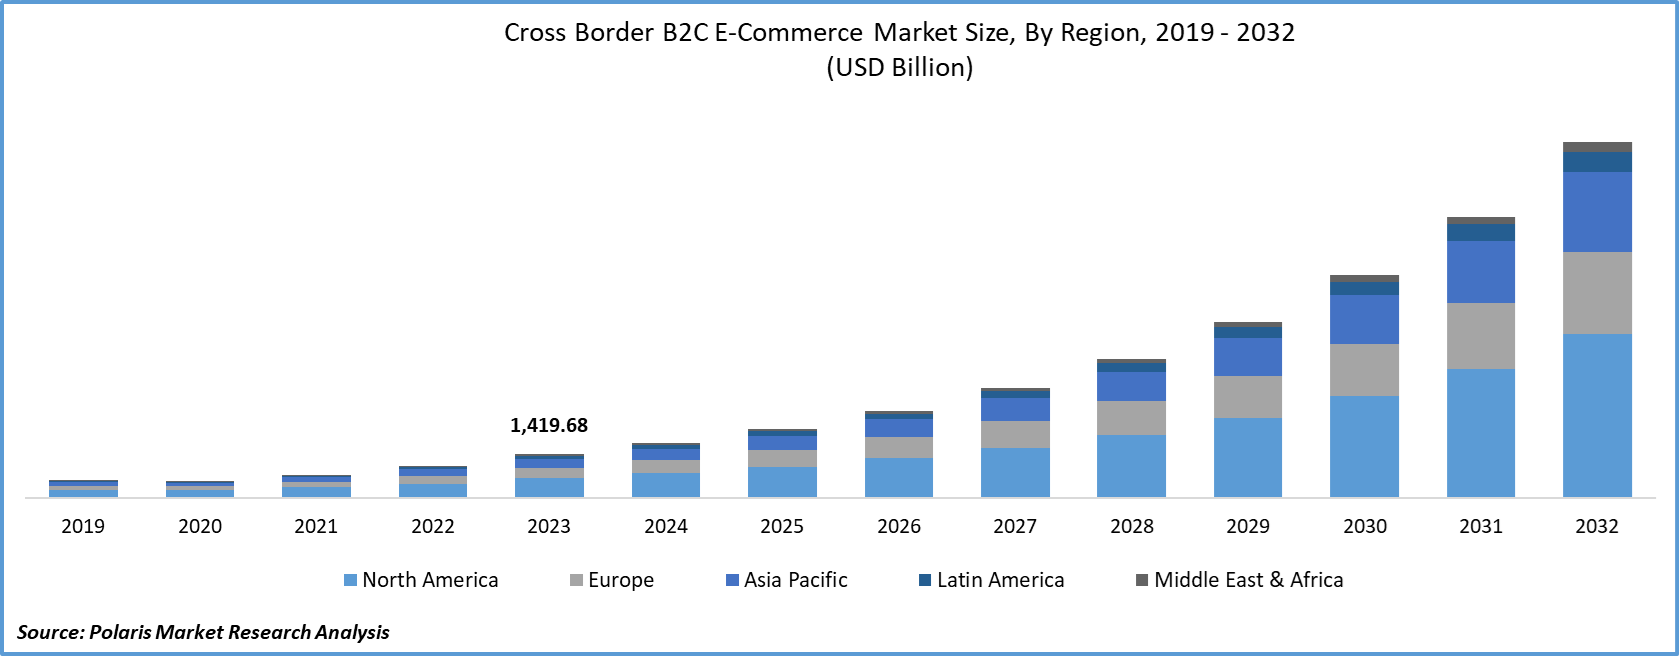 Cross-Border B2C E-Commerce Market Size